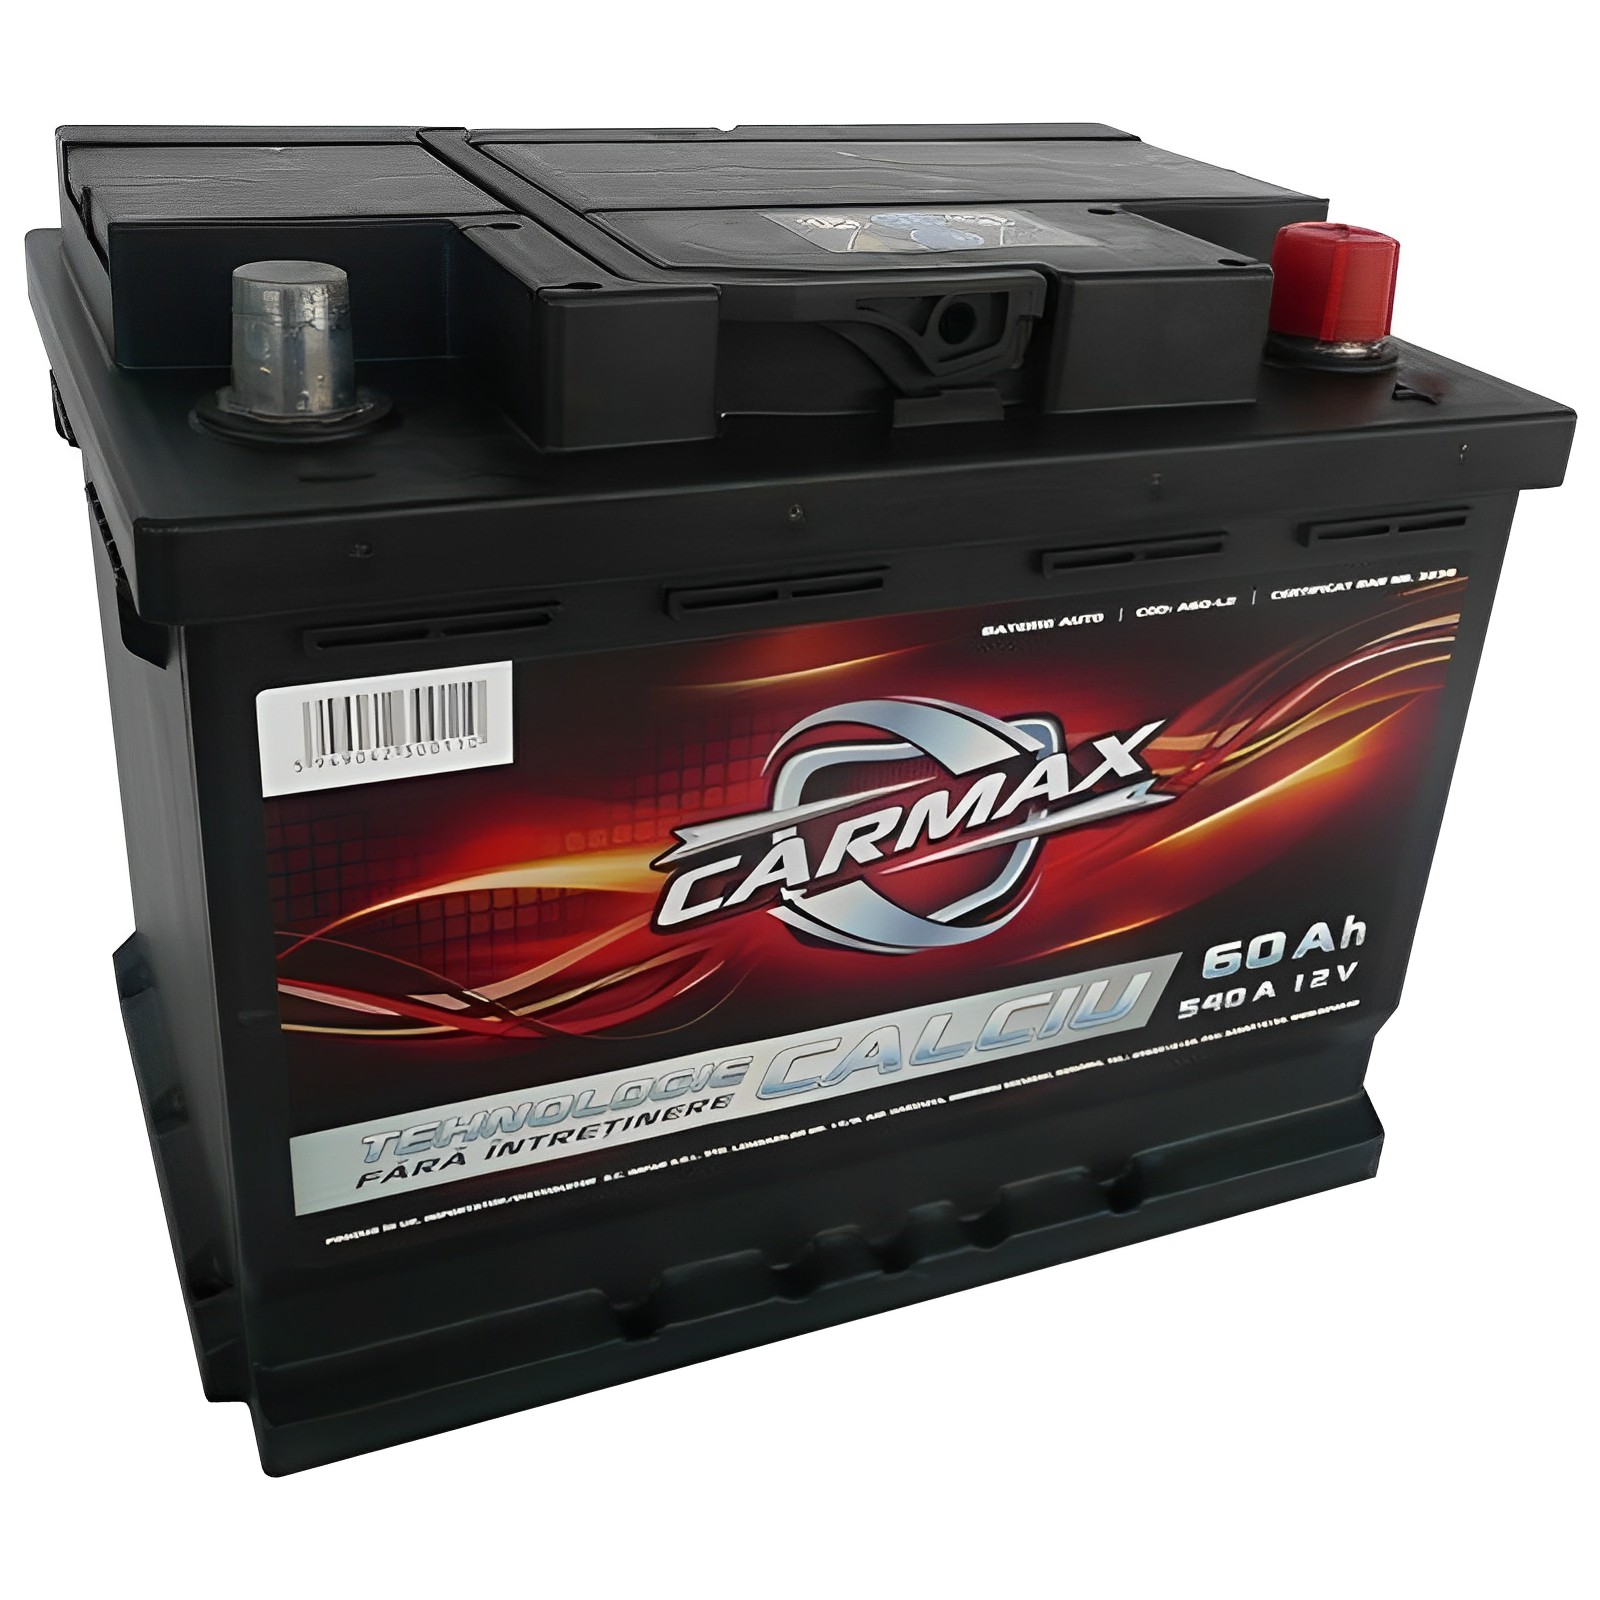 Baterie auto Carmax IdealStore, Capacitate 60Ah,12V, Recomandata masinilor pe benzina